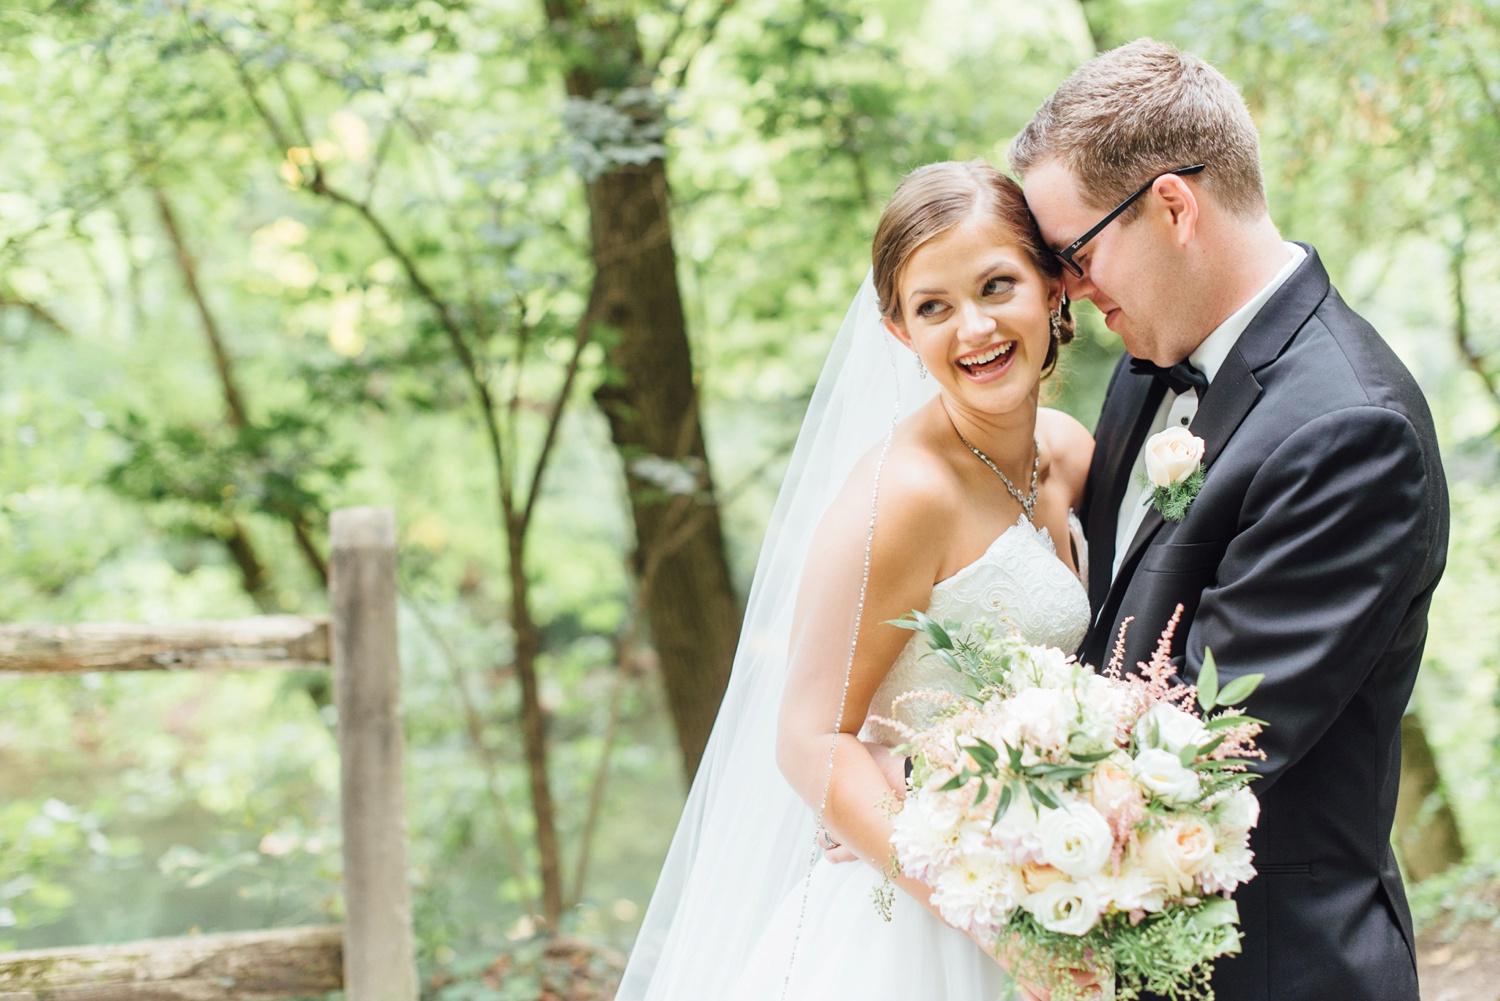 Lauren + Alec - Wissahickon Trail Wedding Portraits - Philadelphia Wedding Photographer - Alison Dunn Photography photo